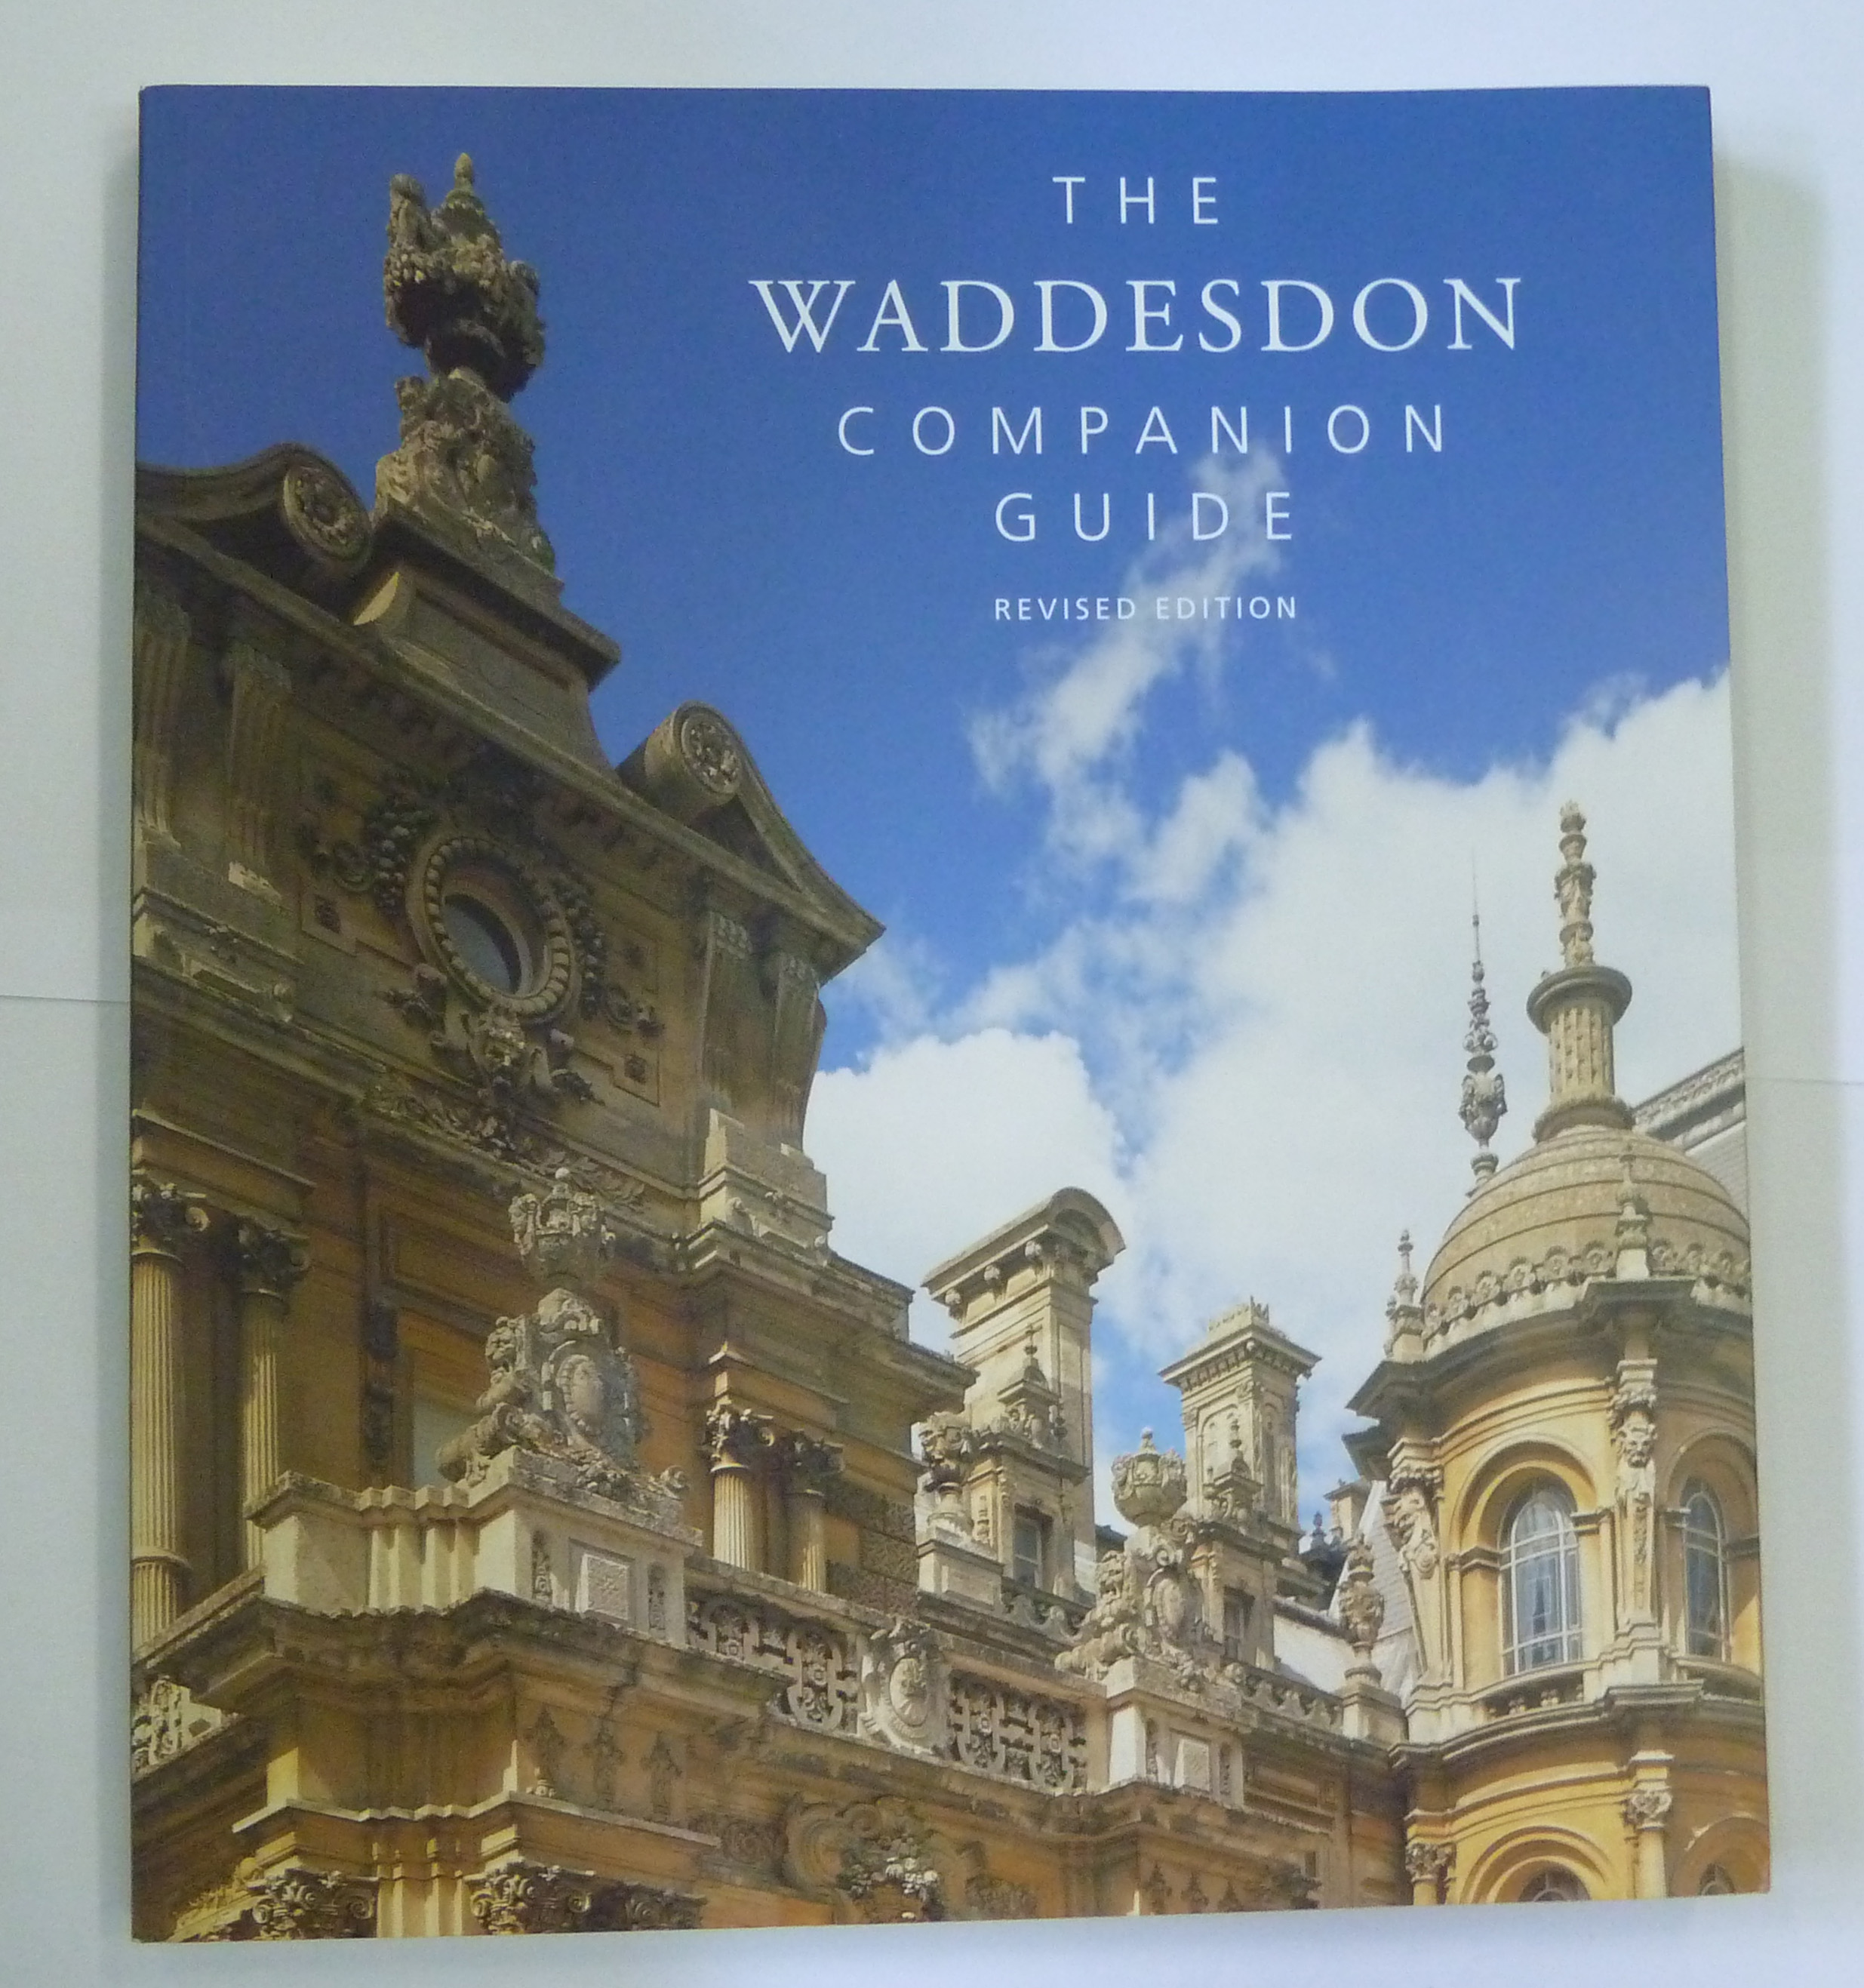 The Waddeson Companion Guide